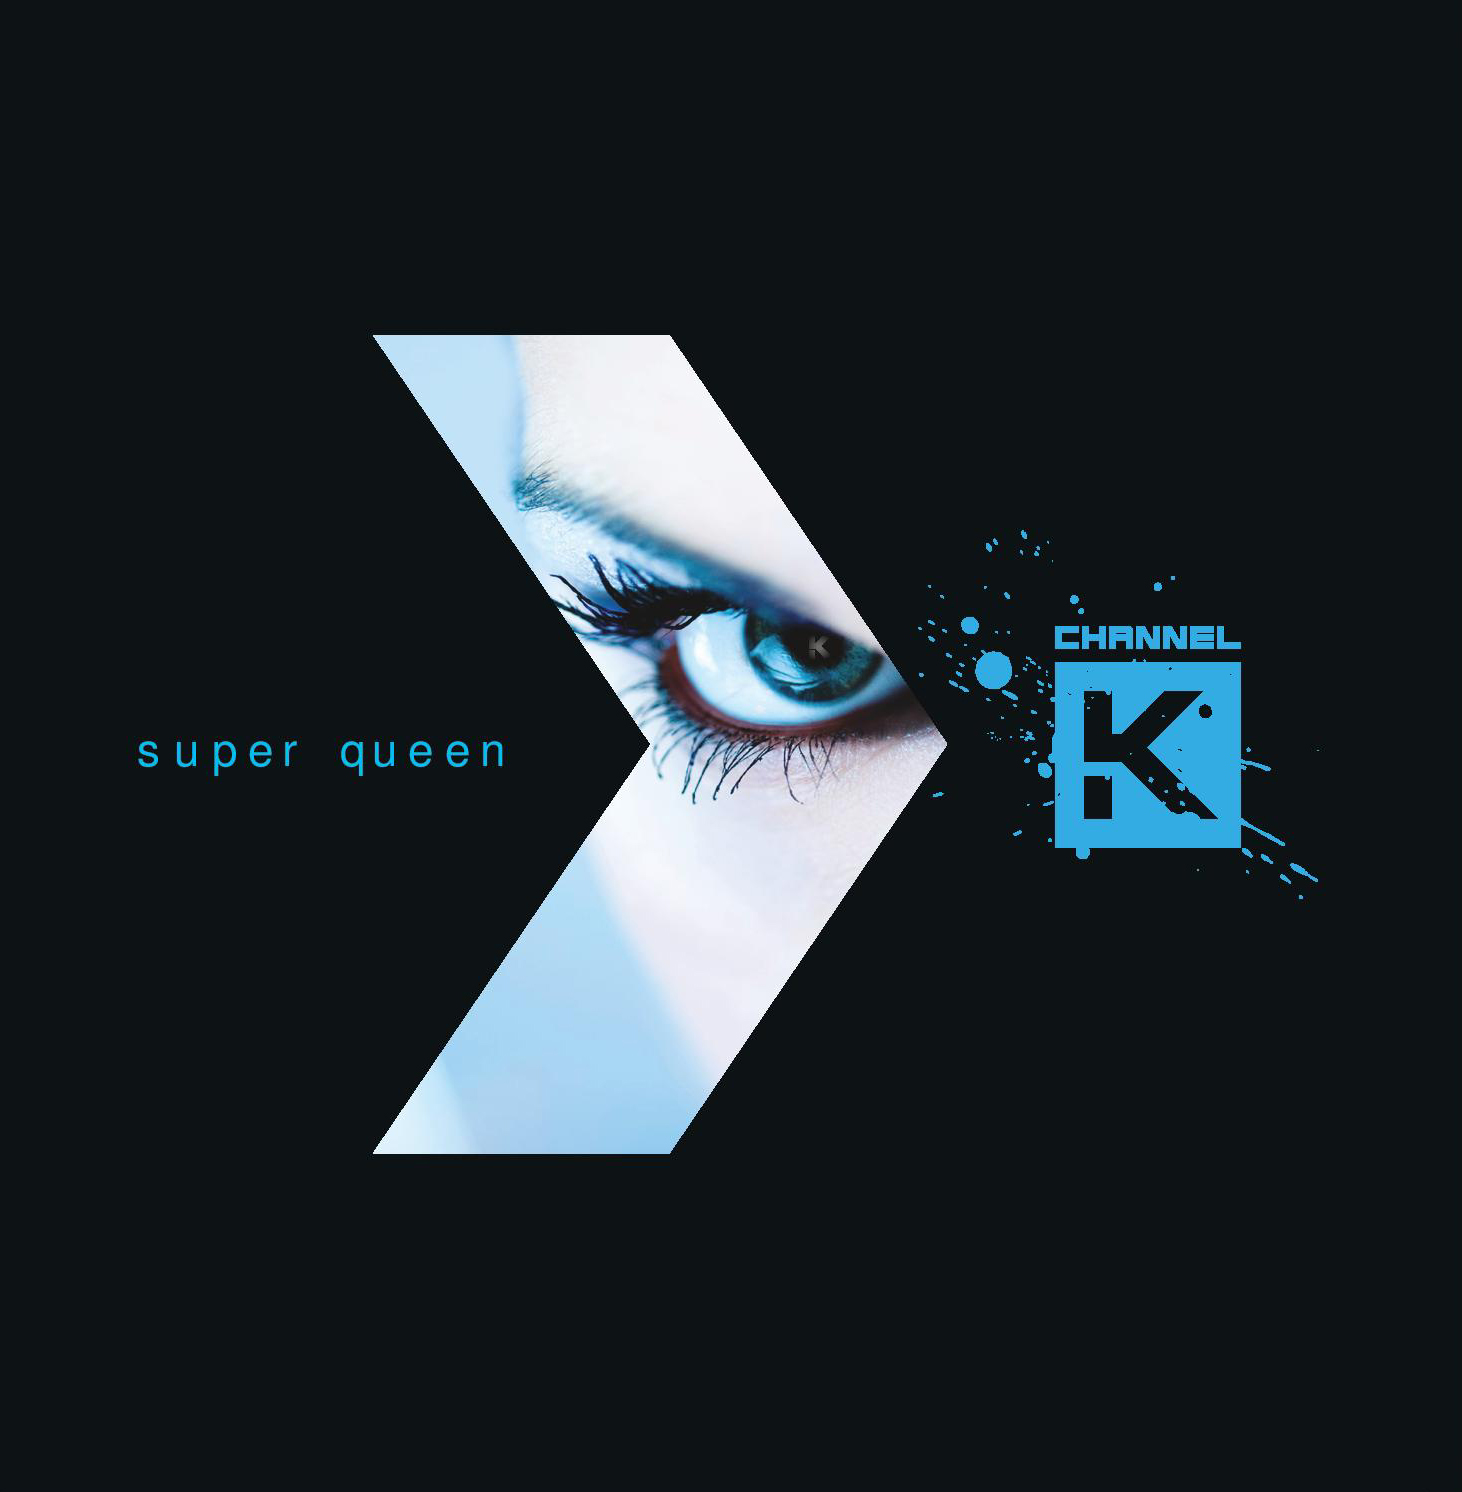  Channel K – Super Queen